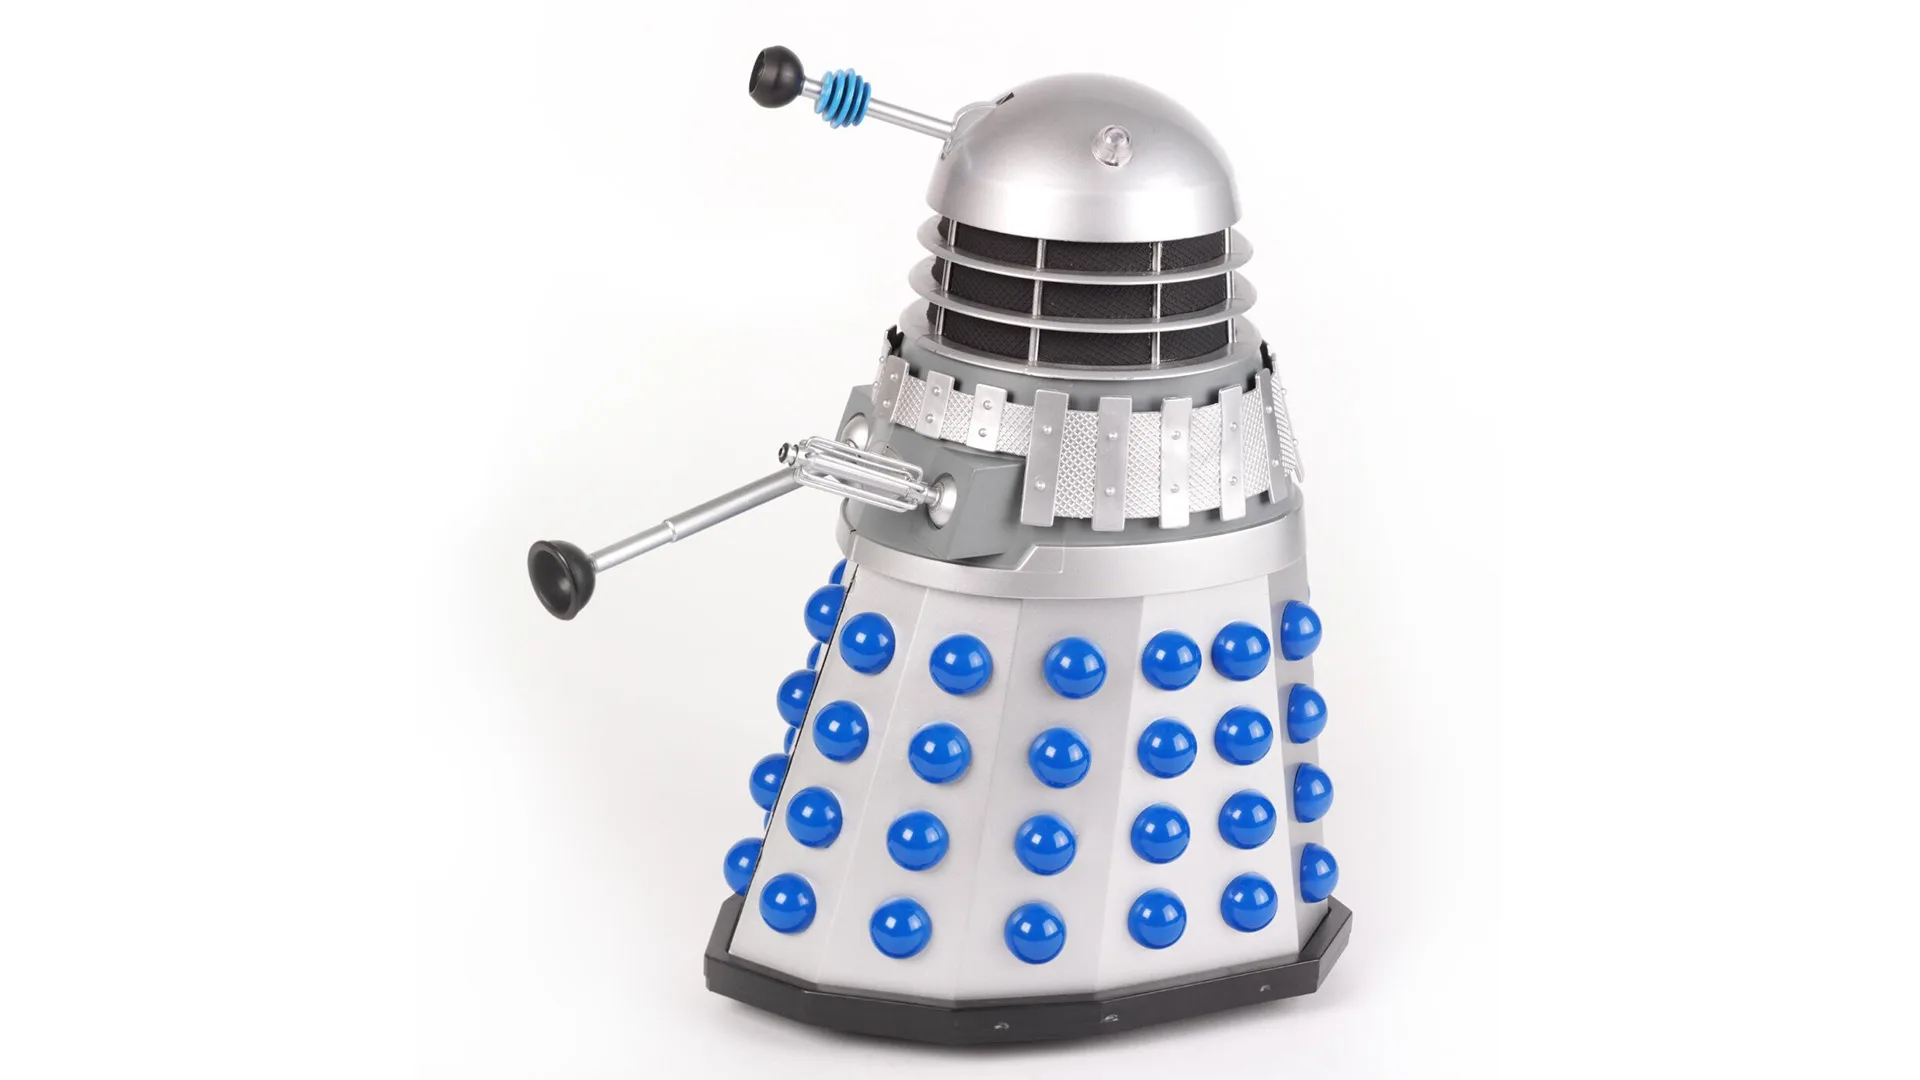 Dalek toy against white background